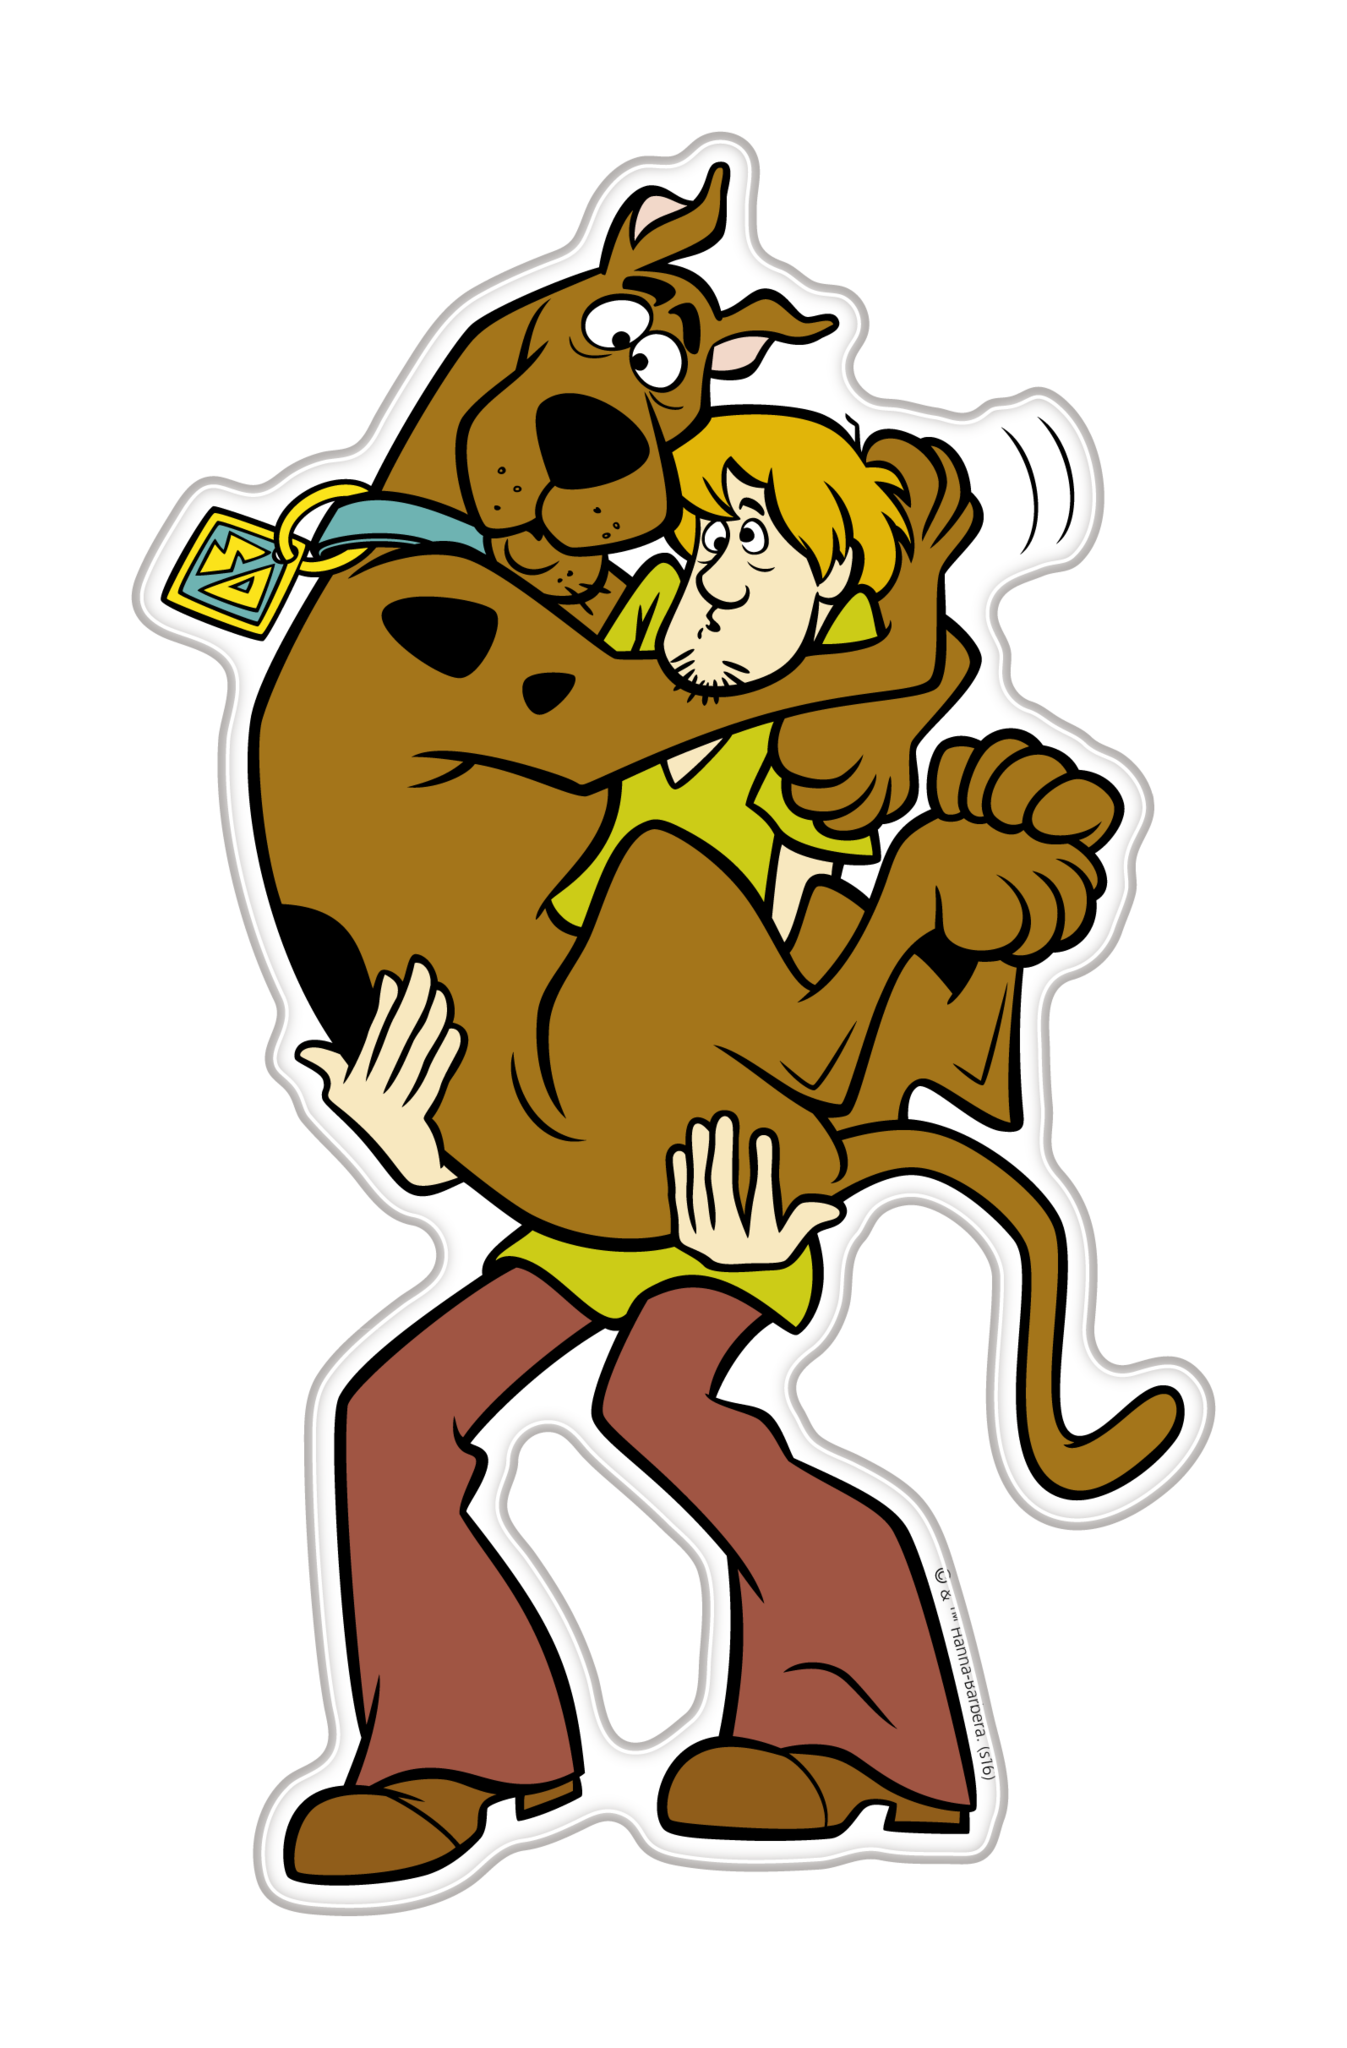 Scooby doo clipart human. Shaggy rogers daphne blake